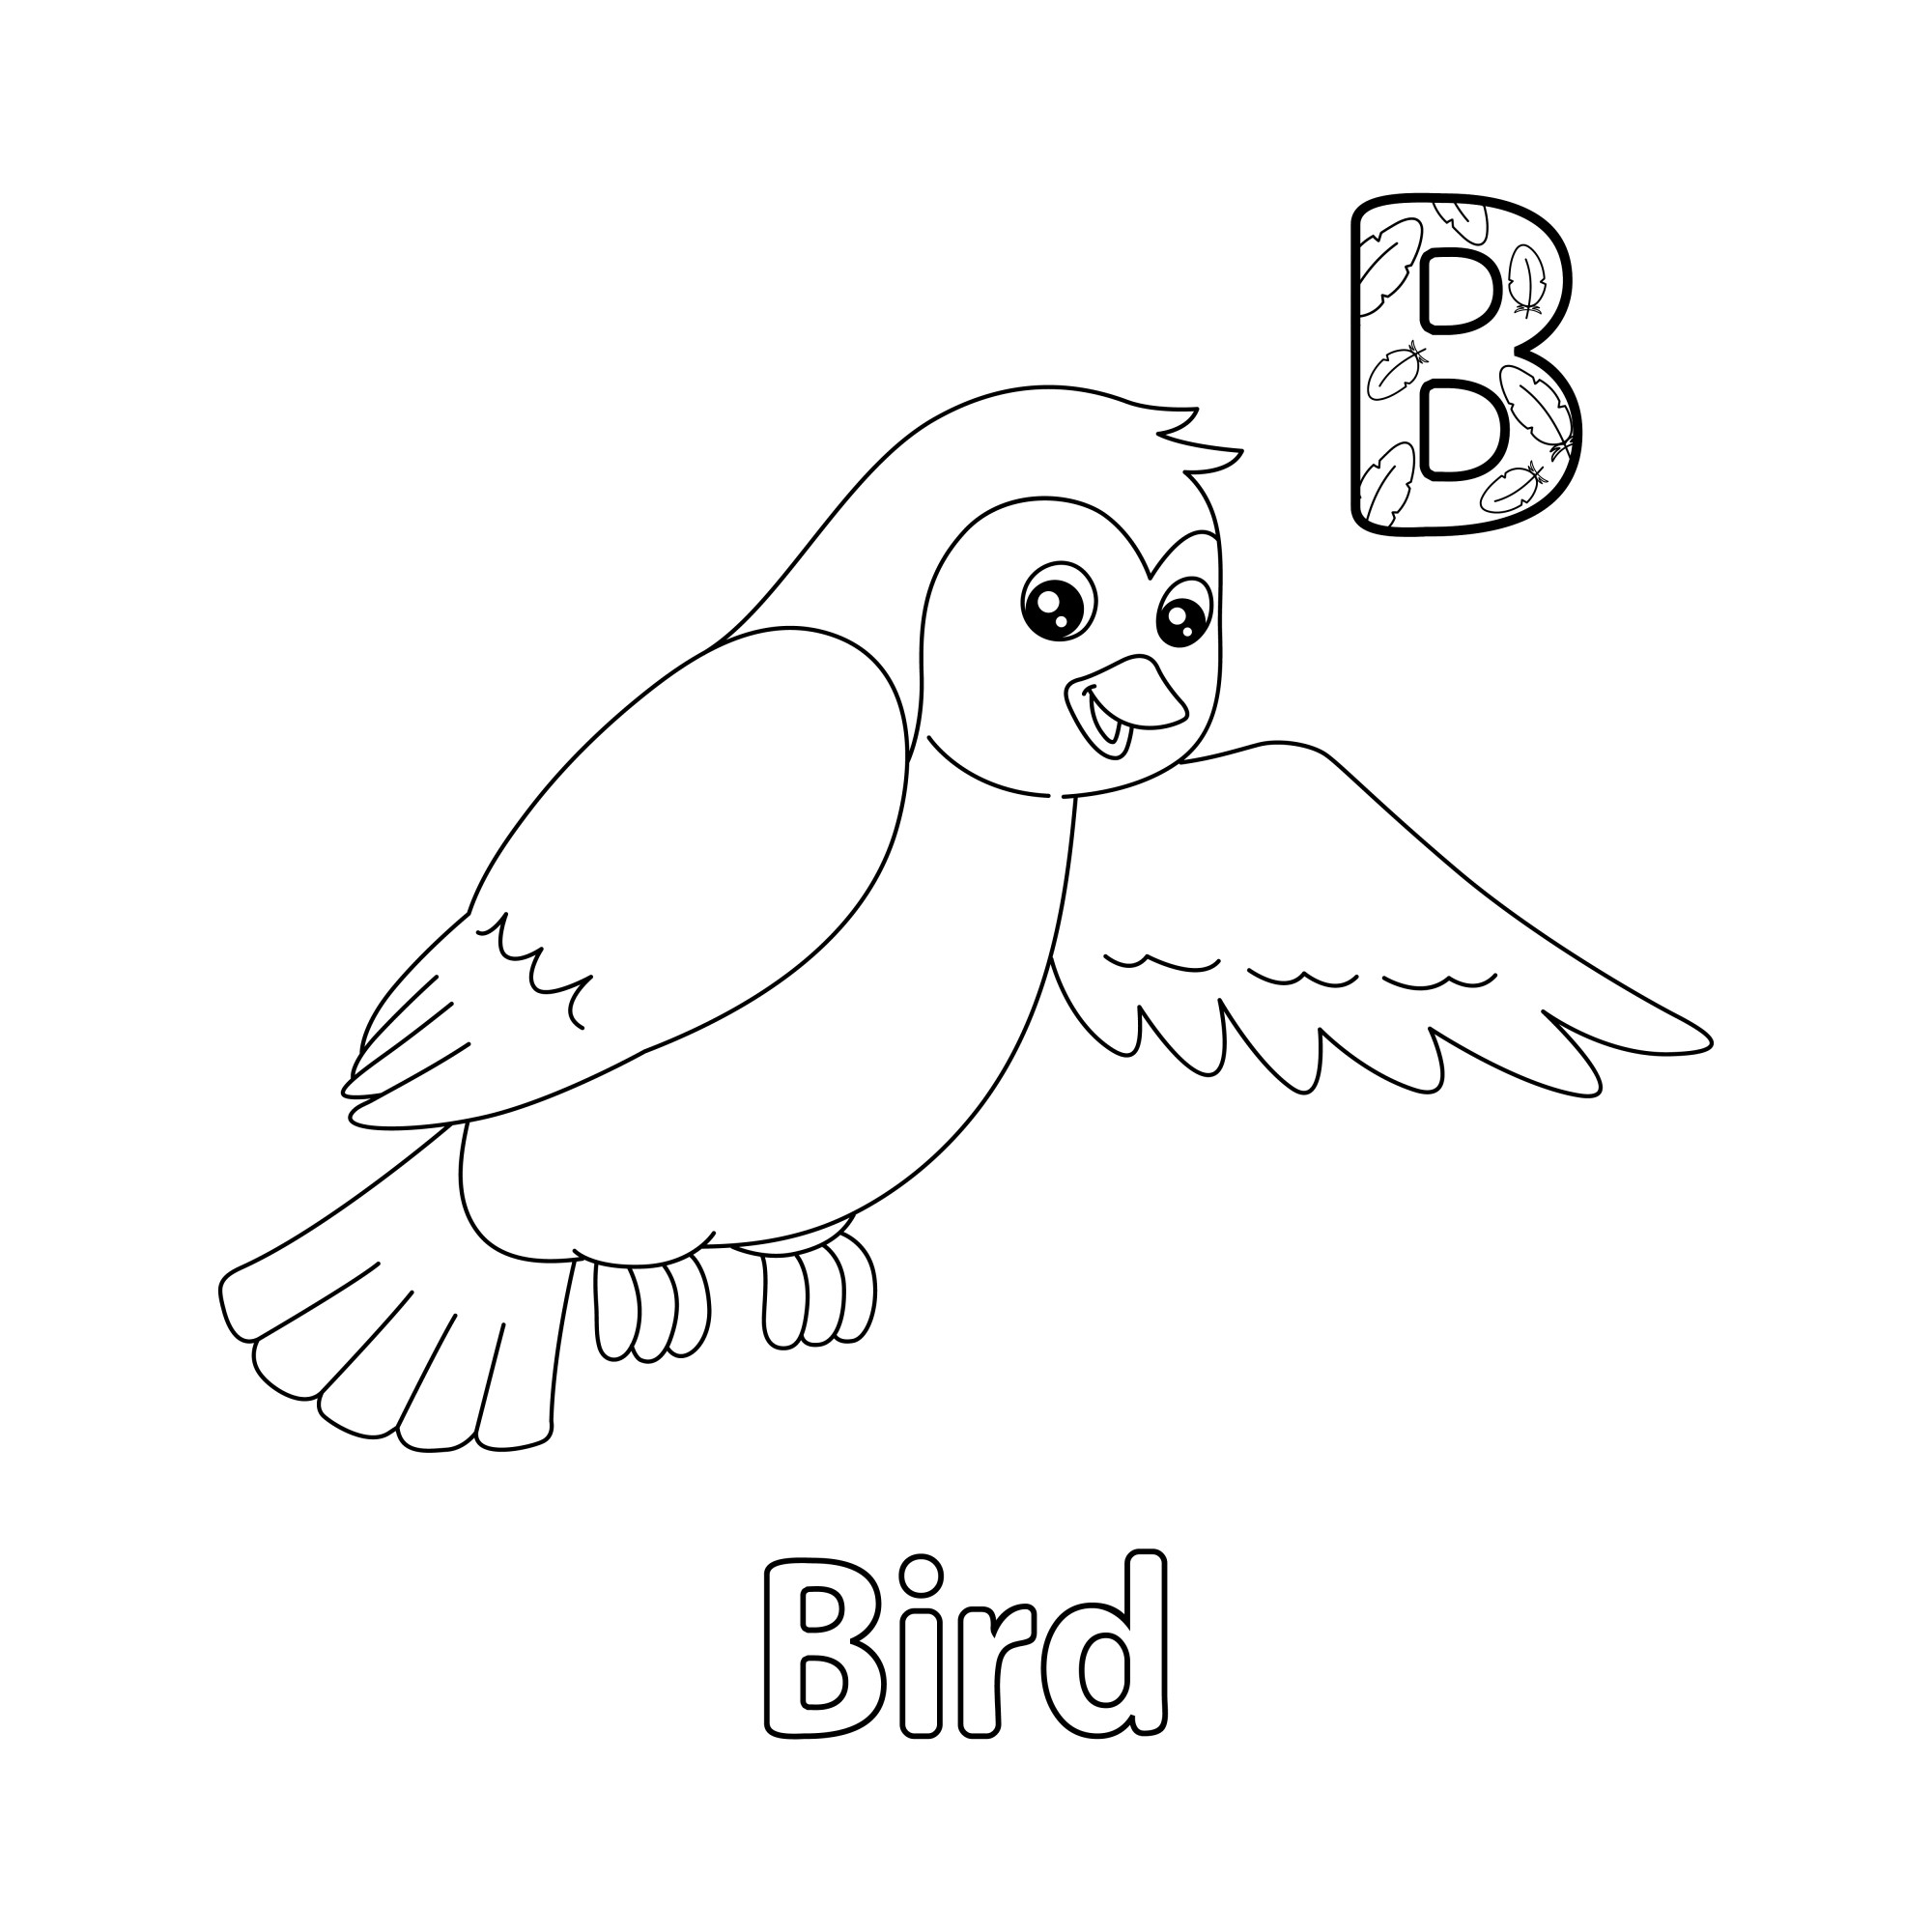 Раскраска для детей: буква B английского алфавита